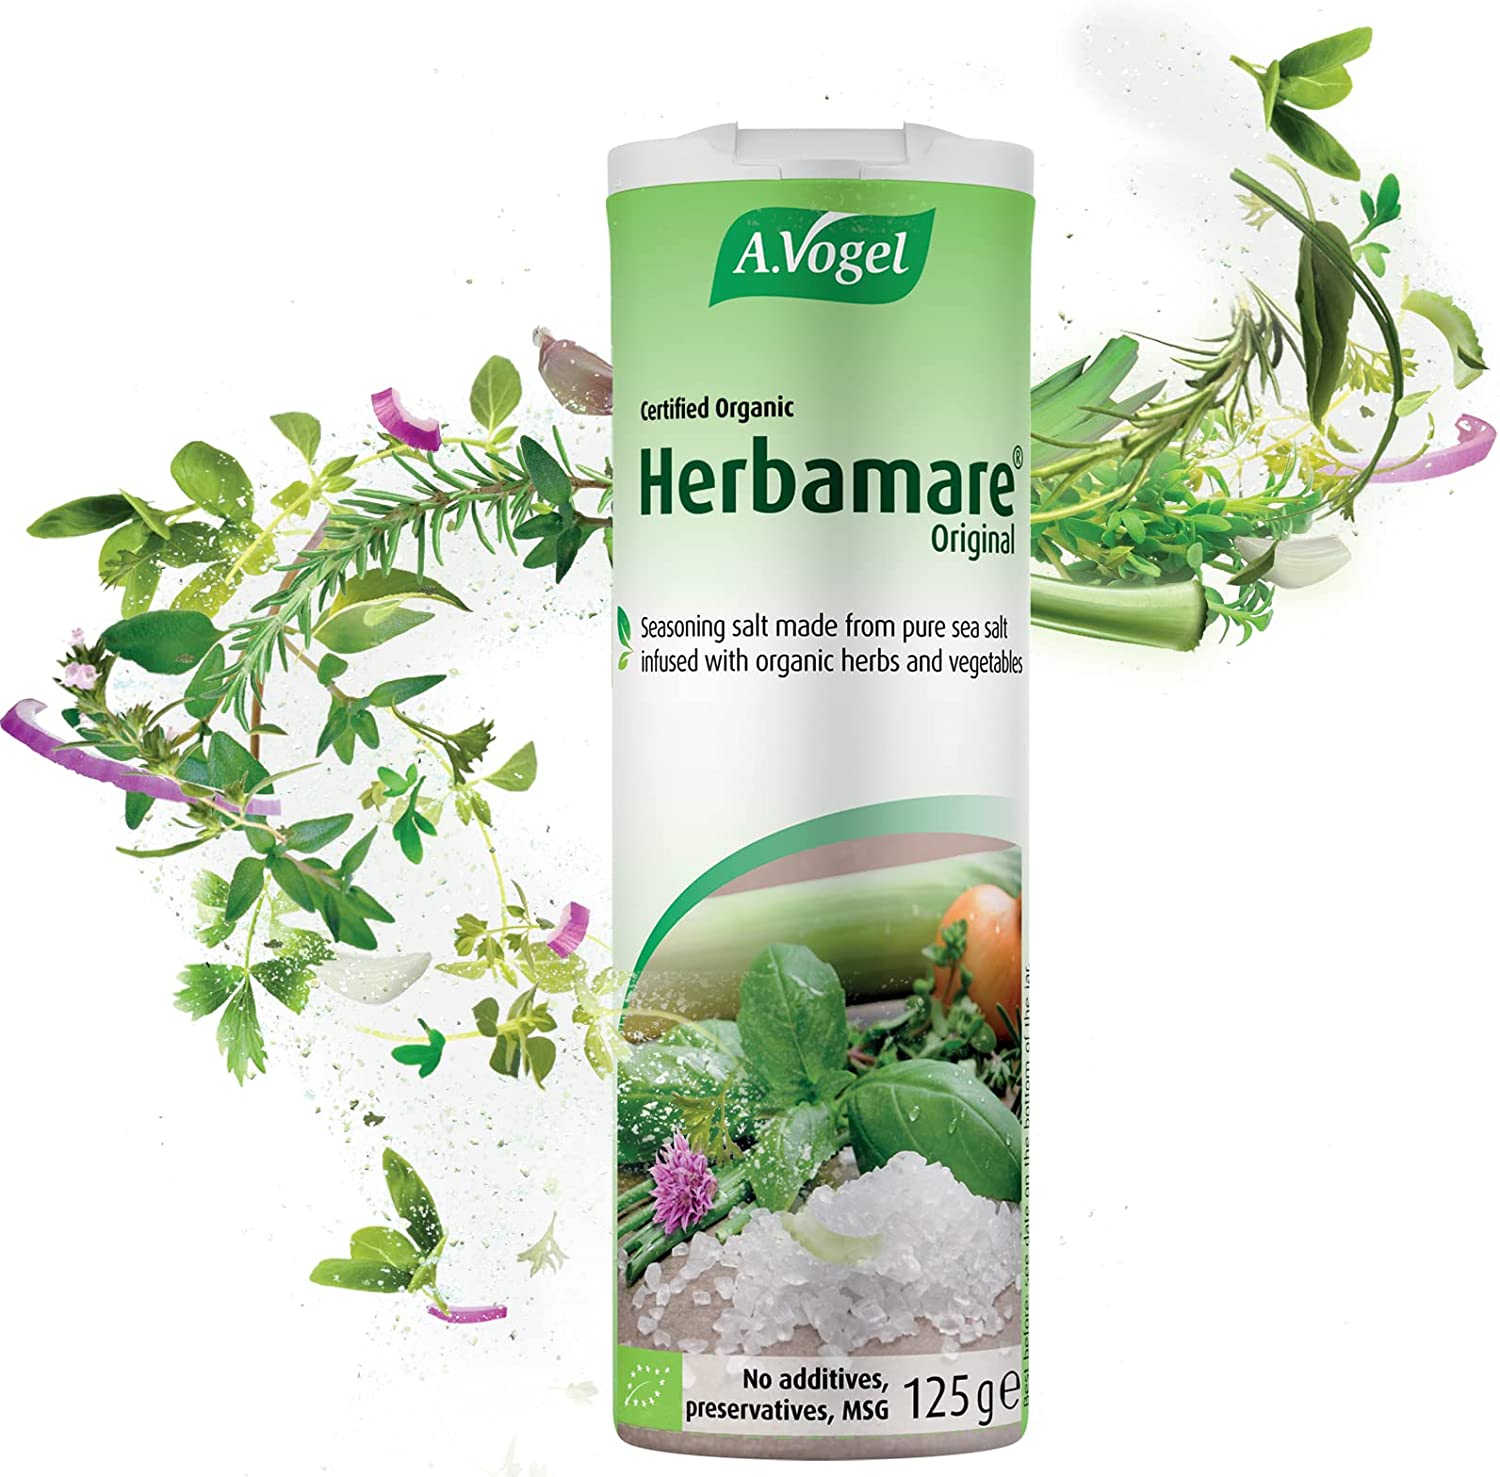 A.Vogel Bioforce Herbamare Original Organic Herb Seasoning Salt 125g –